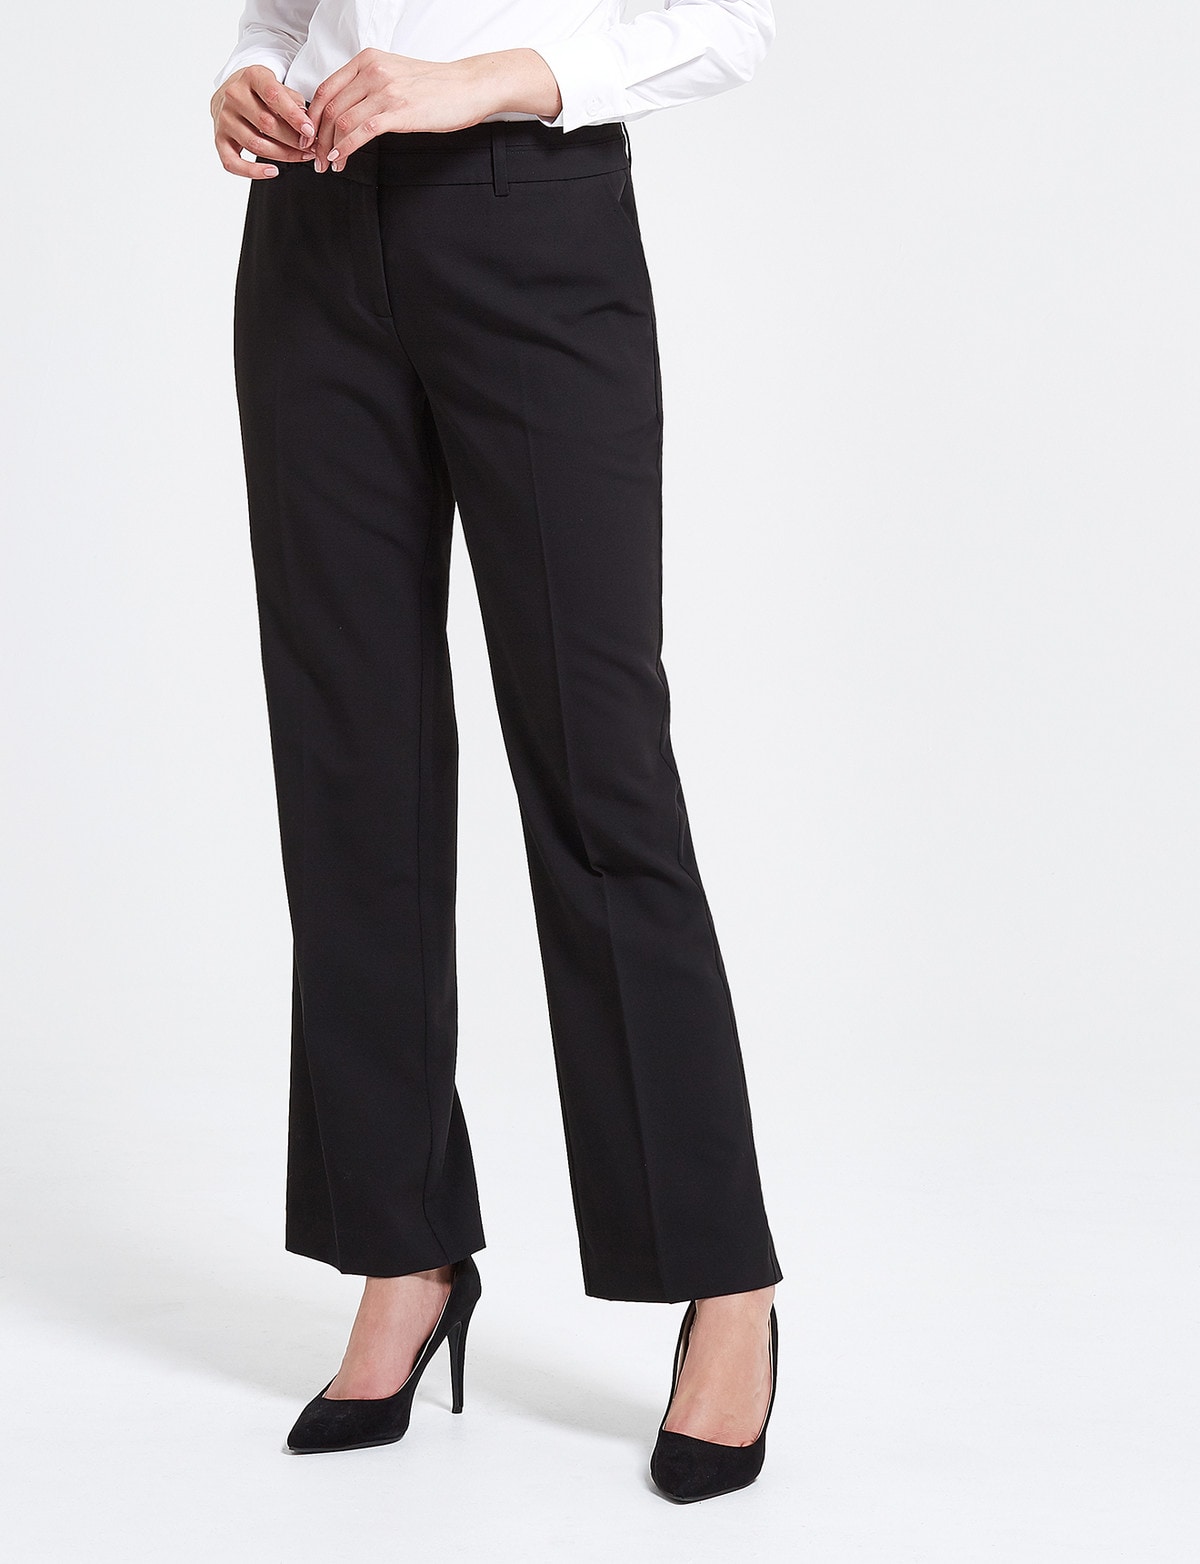 SUPRYIA Slim Fit Women Beige, Black Trousers - Buy SUPRYIA Slim Fit Women  Beige, Black Trousers Online at Best Prices in India | Flipkart.com